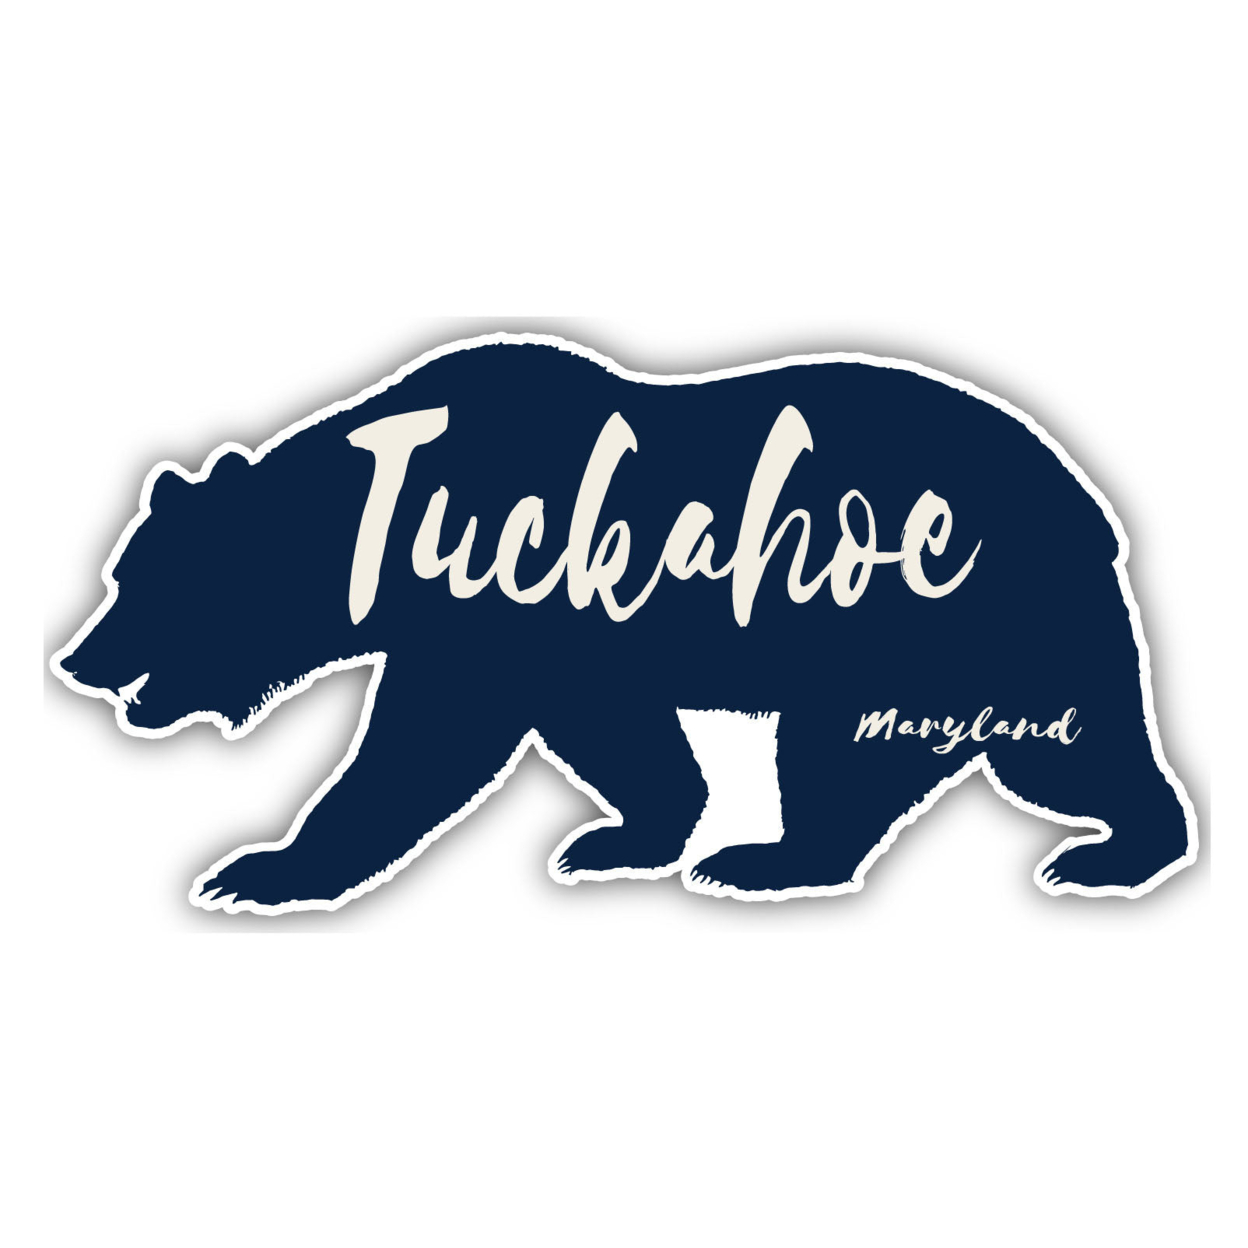 Tuckahoe Maryland Souvenir Decorative Stickers (Choose Theme And Size) - Single Unit, 4-Inch, Bear